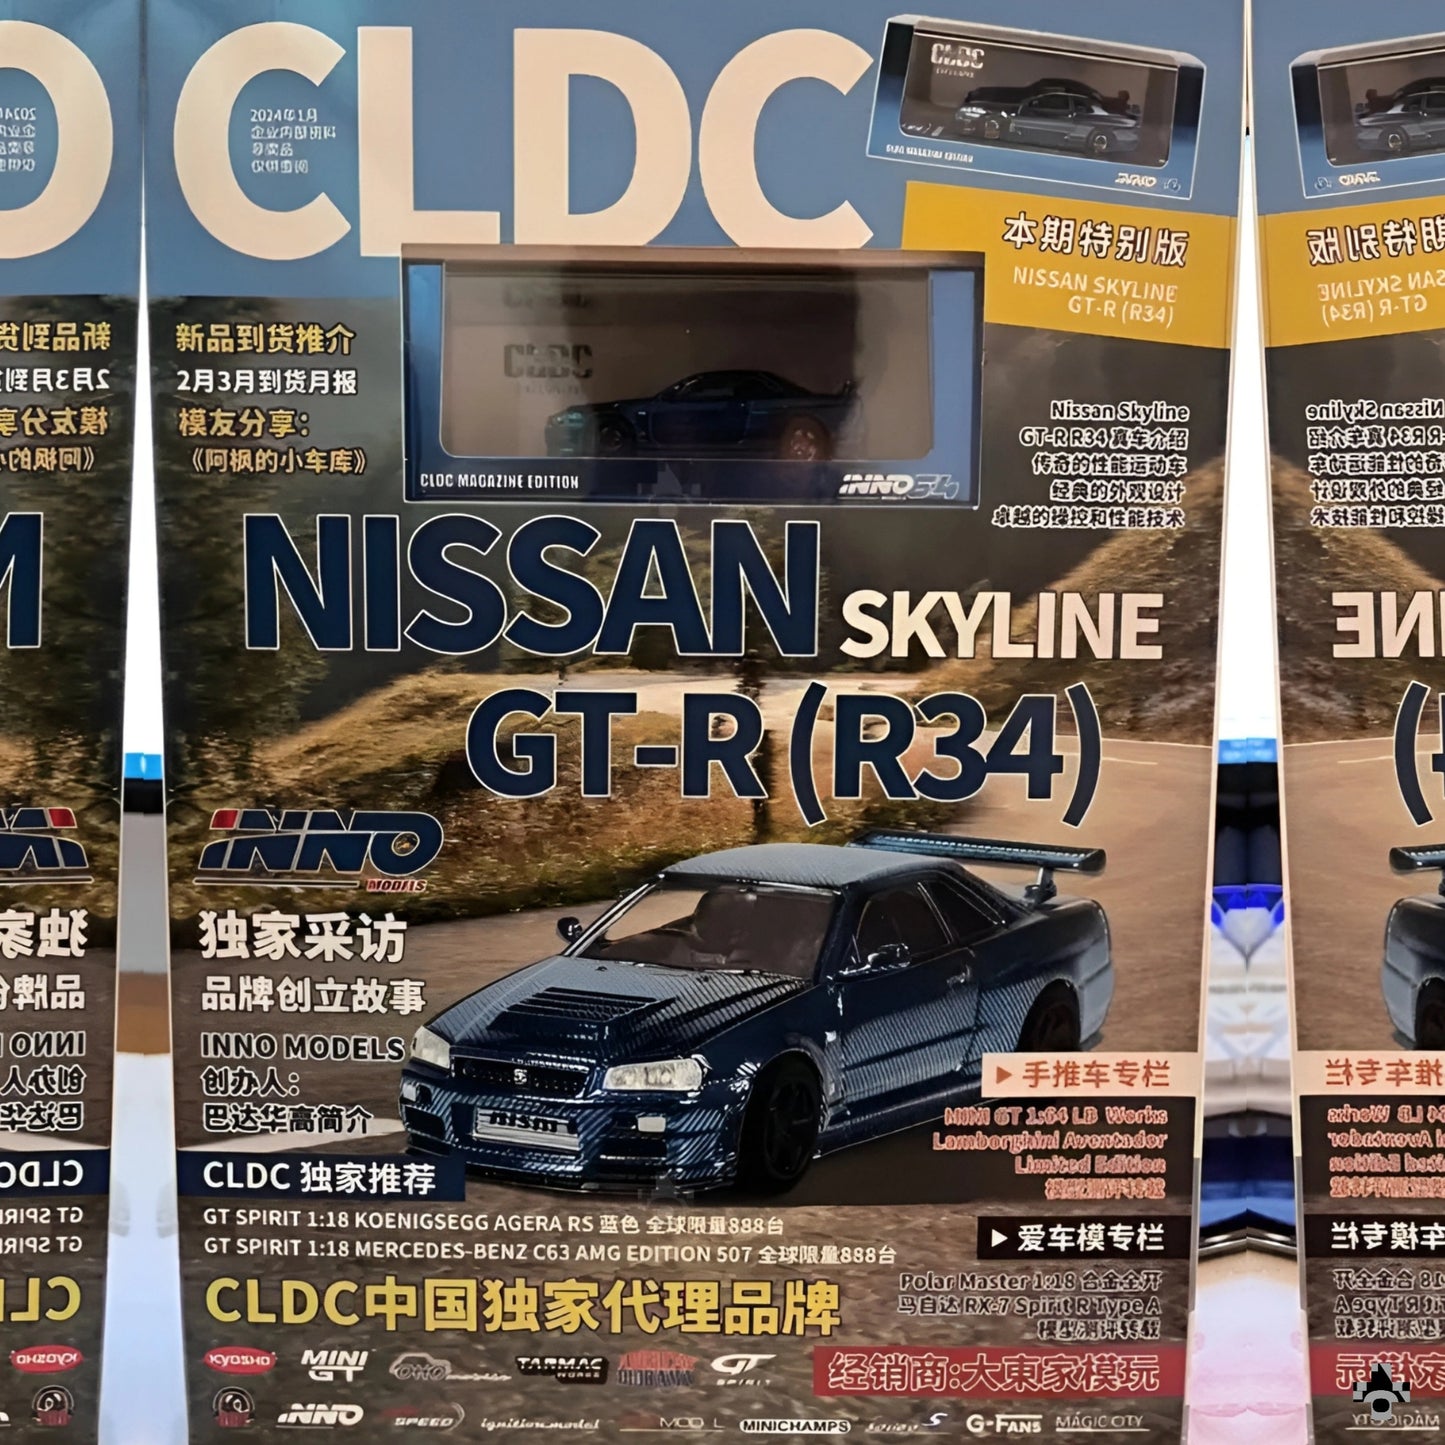 INNO64 Gtr r34 CLDC Magazine Edition